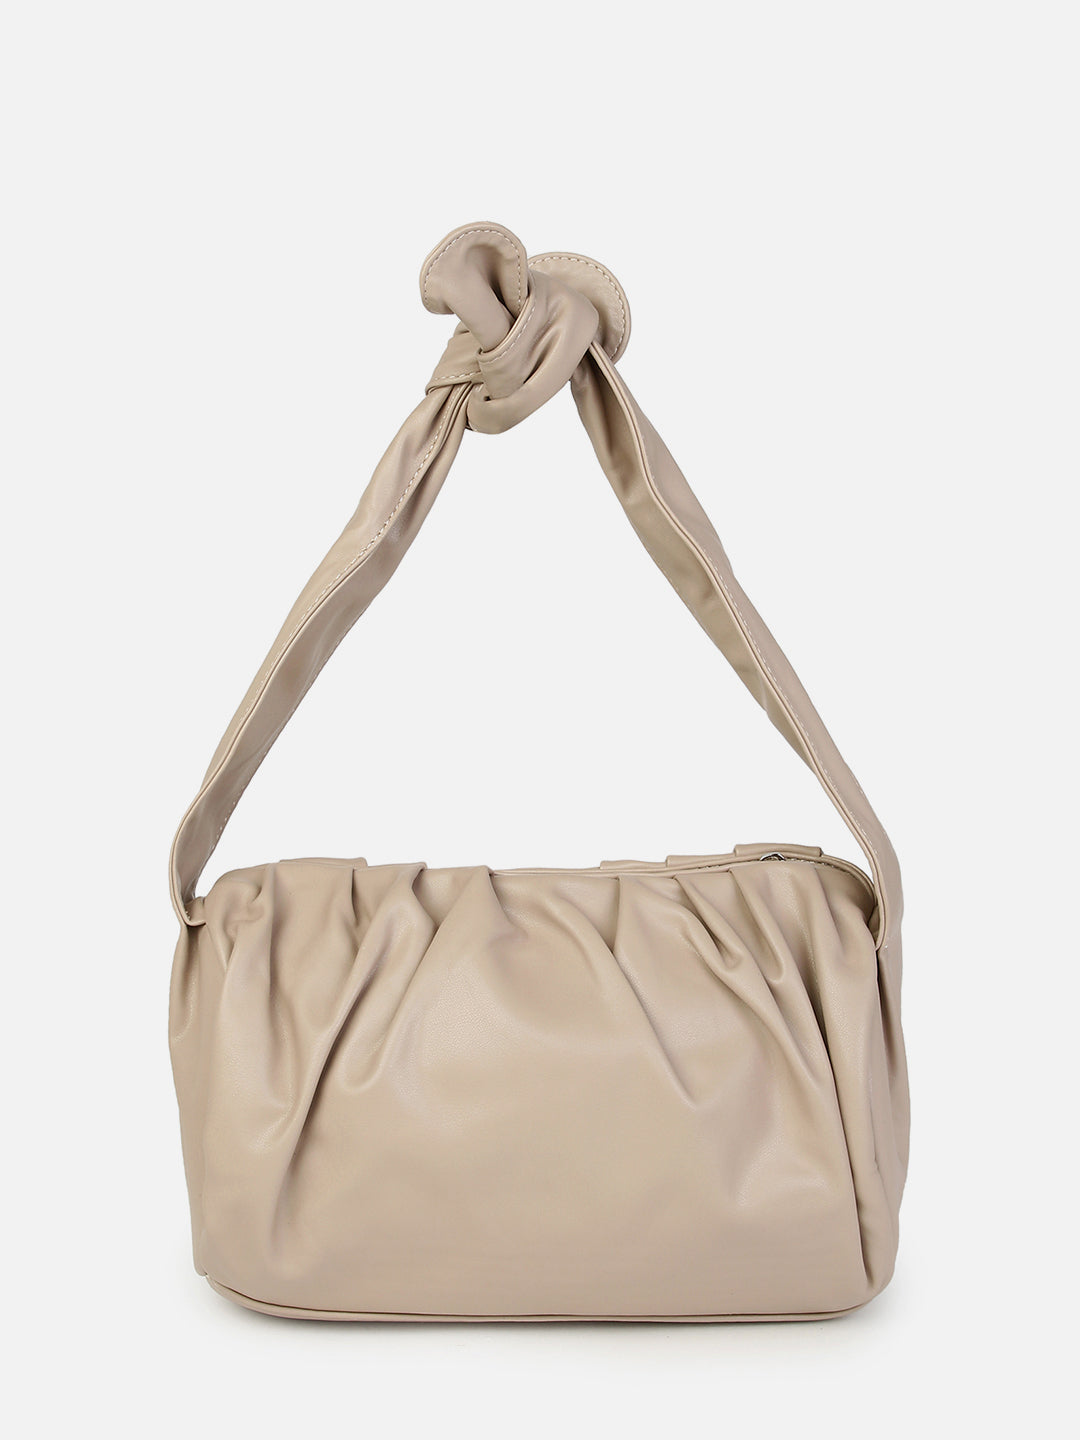 Linette Beige Handbag